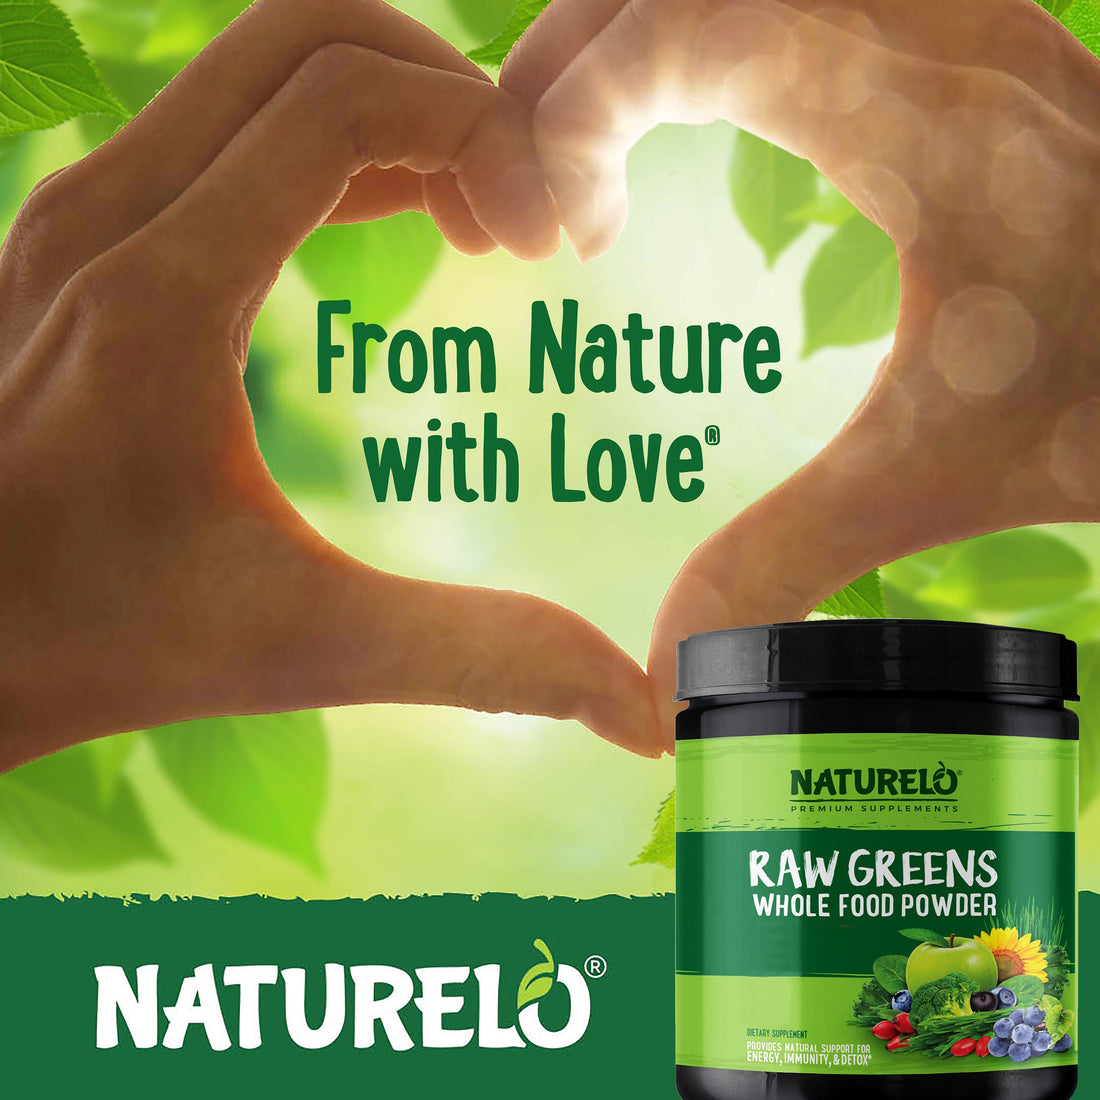 Premium Photo  Healthy organic green fruits and nature green